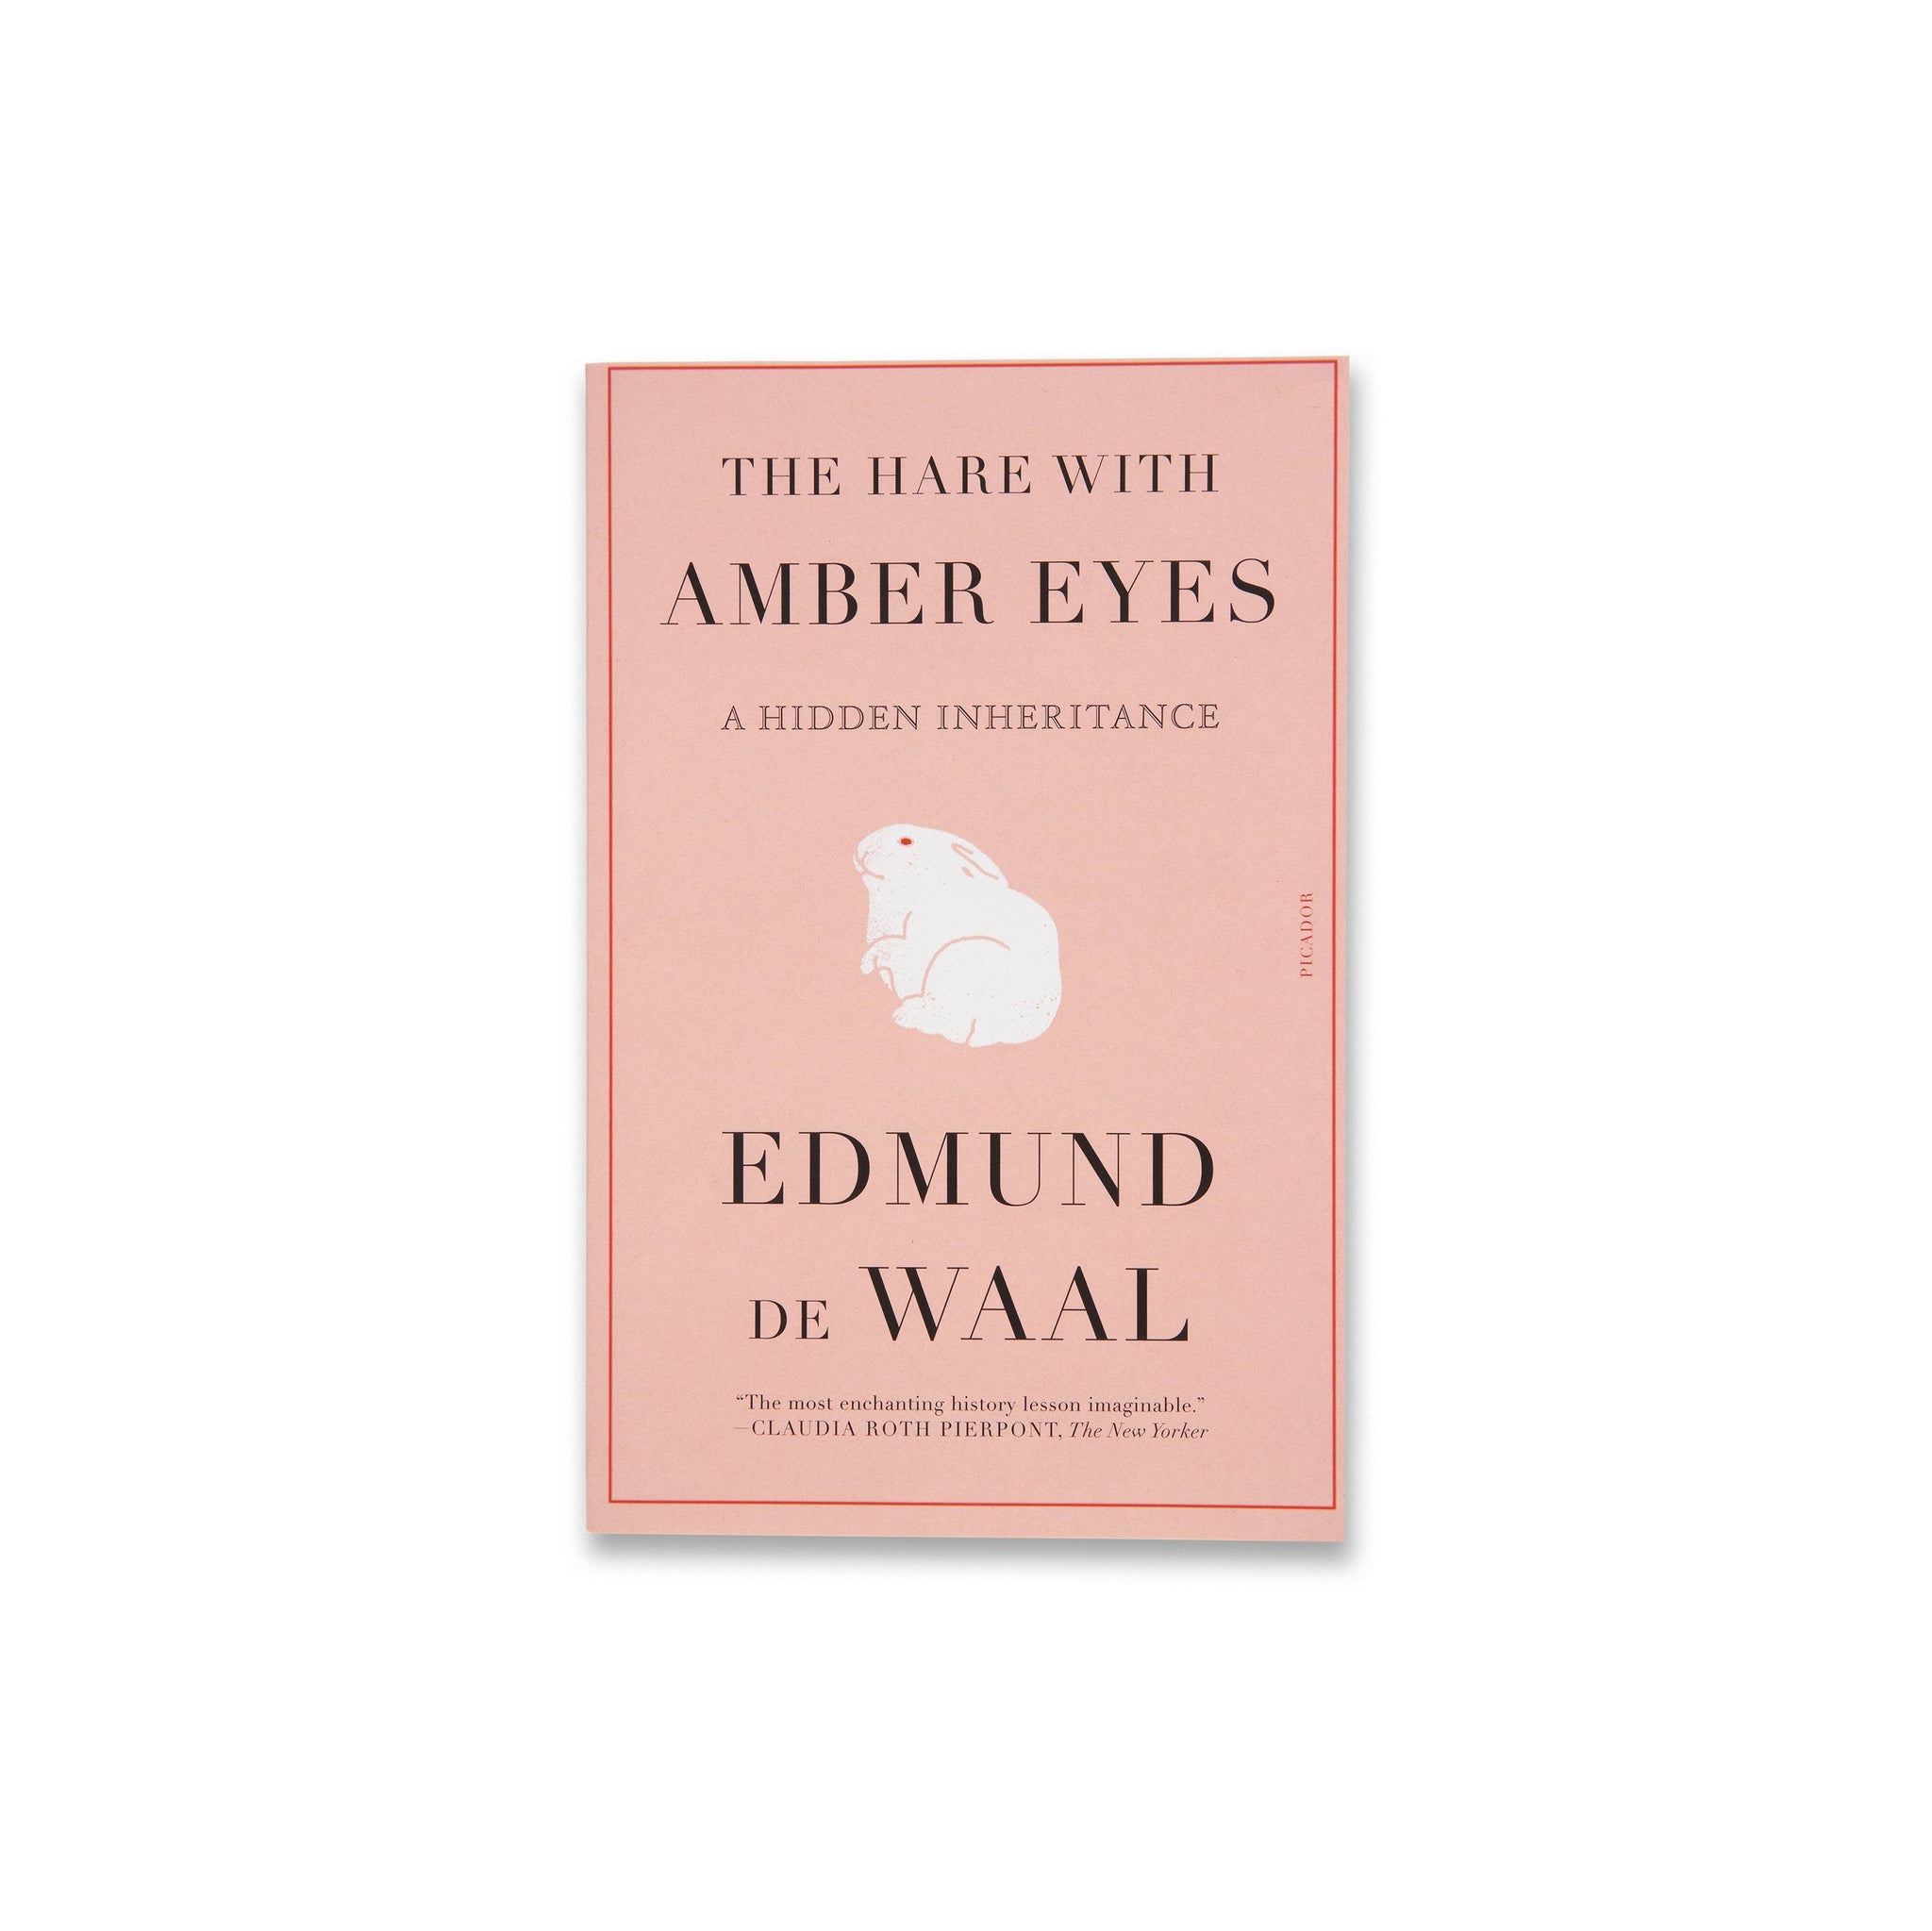 Edmund de Waal: The Hare with Amber Eyes: A Hidden Inheritance